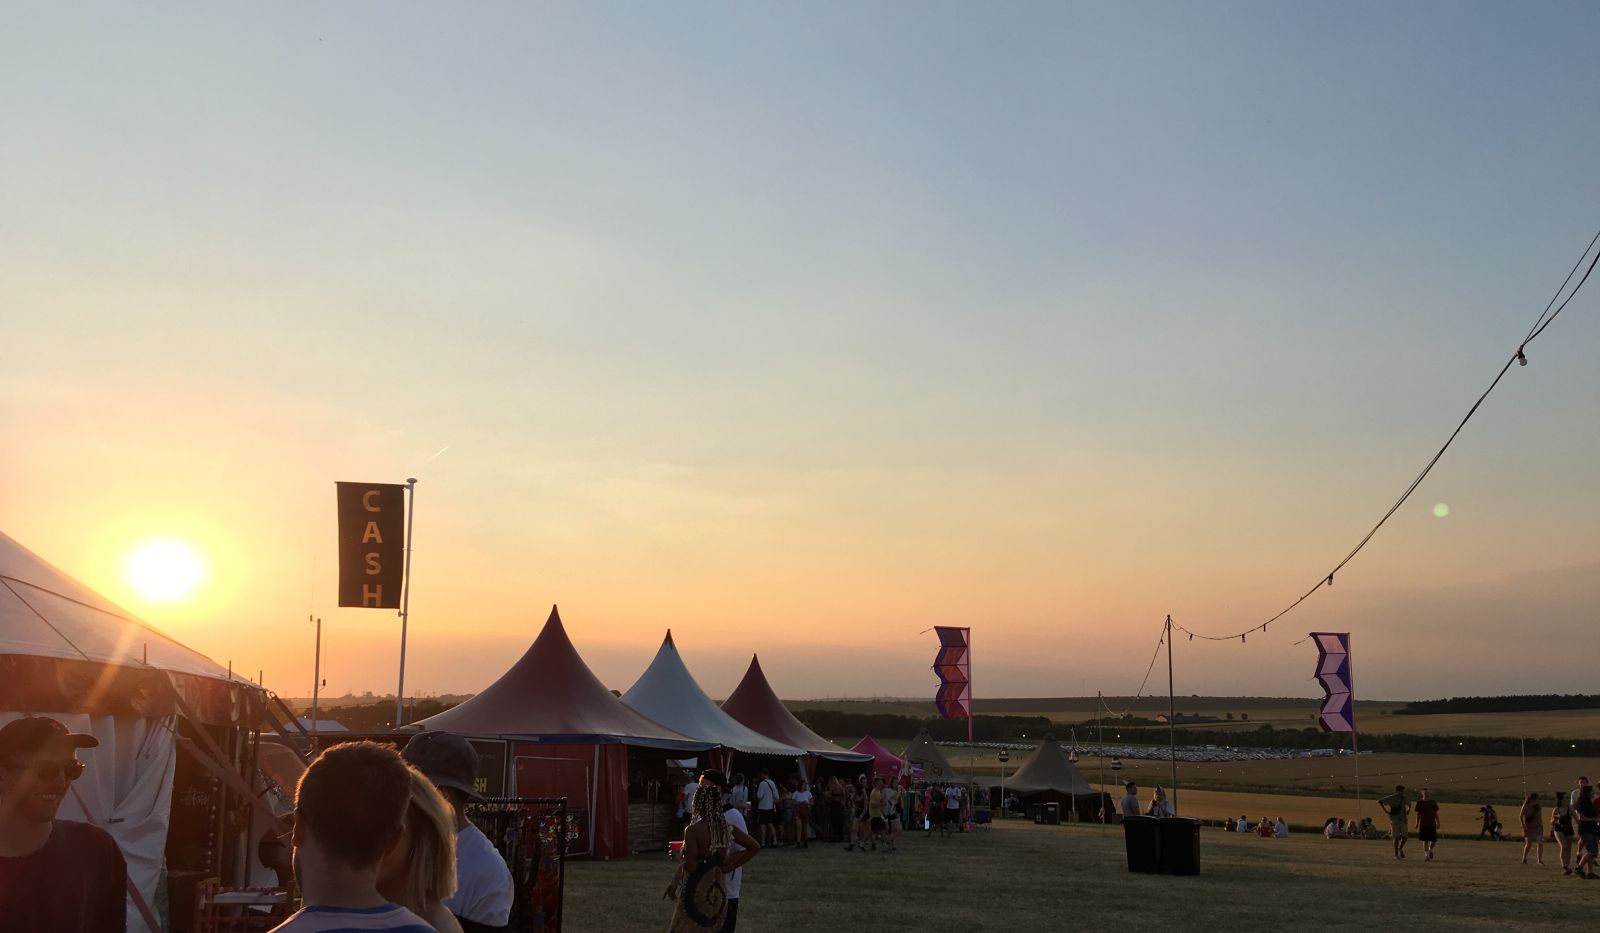 The sun sets over the beautiful Farr Festival site.